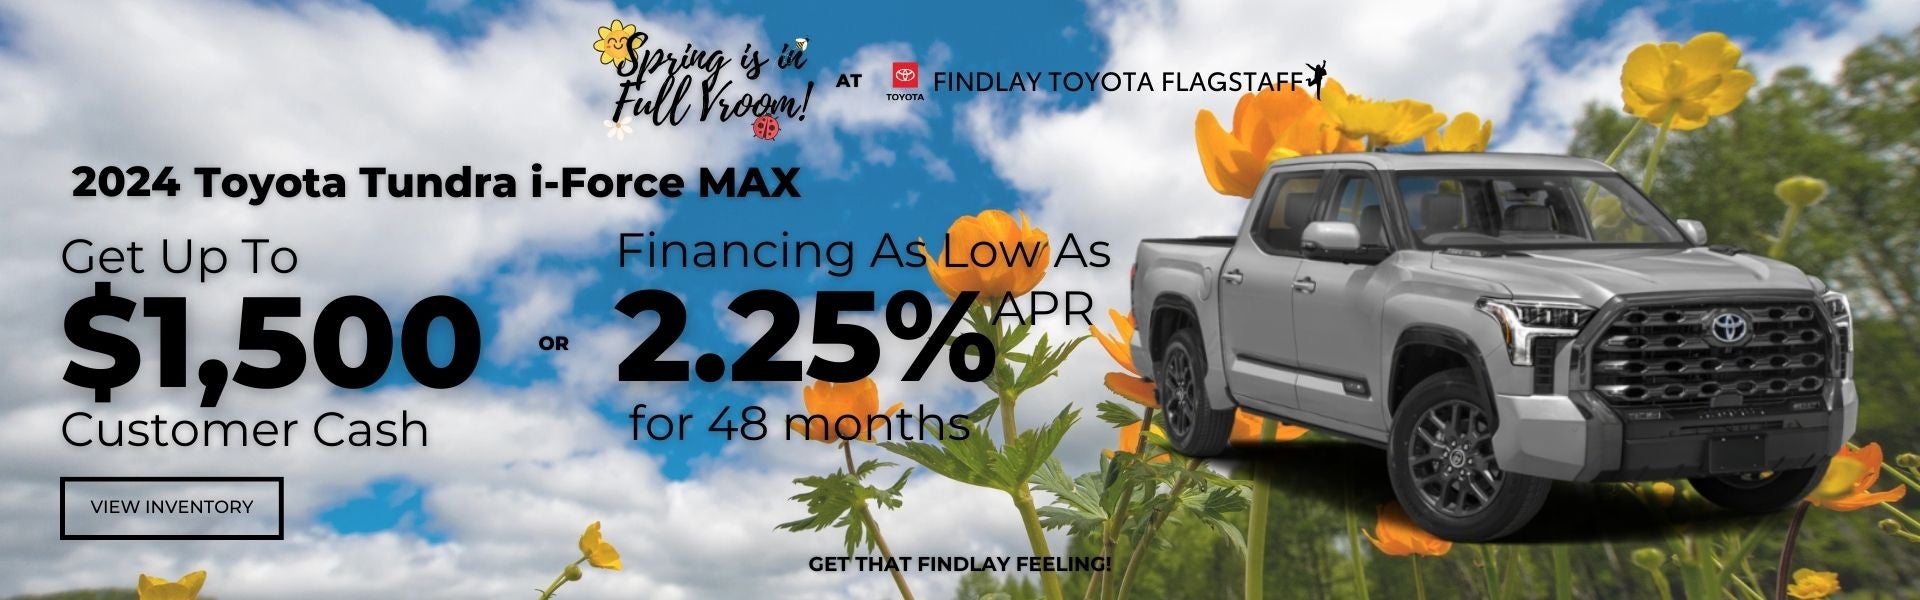 Spring is in Full Vroom at Findlay Toyota Flagstaff